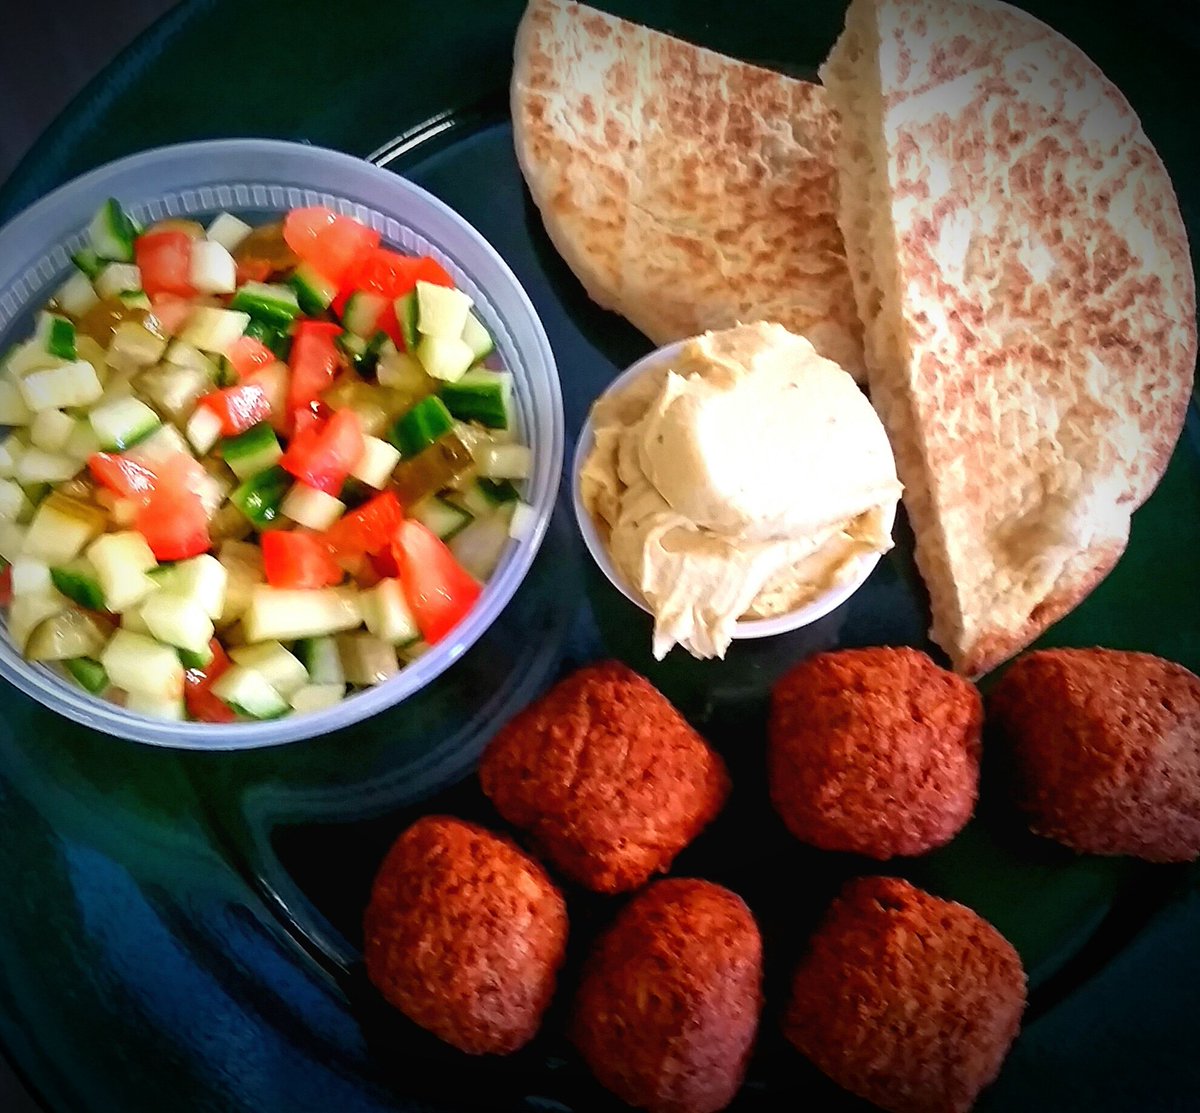 Falafel platter! Comes with falafel, a fresh israeli salad, Hummus, and pita bread.
#vegan #healthy #israelistyle #kosher #KosherinDesMoines #kosheriniowa #kosherdeli #Falafel #israel #hummus #beamaccabee